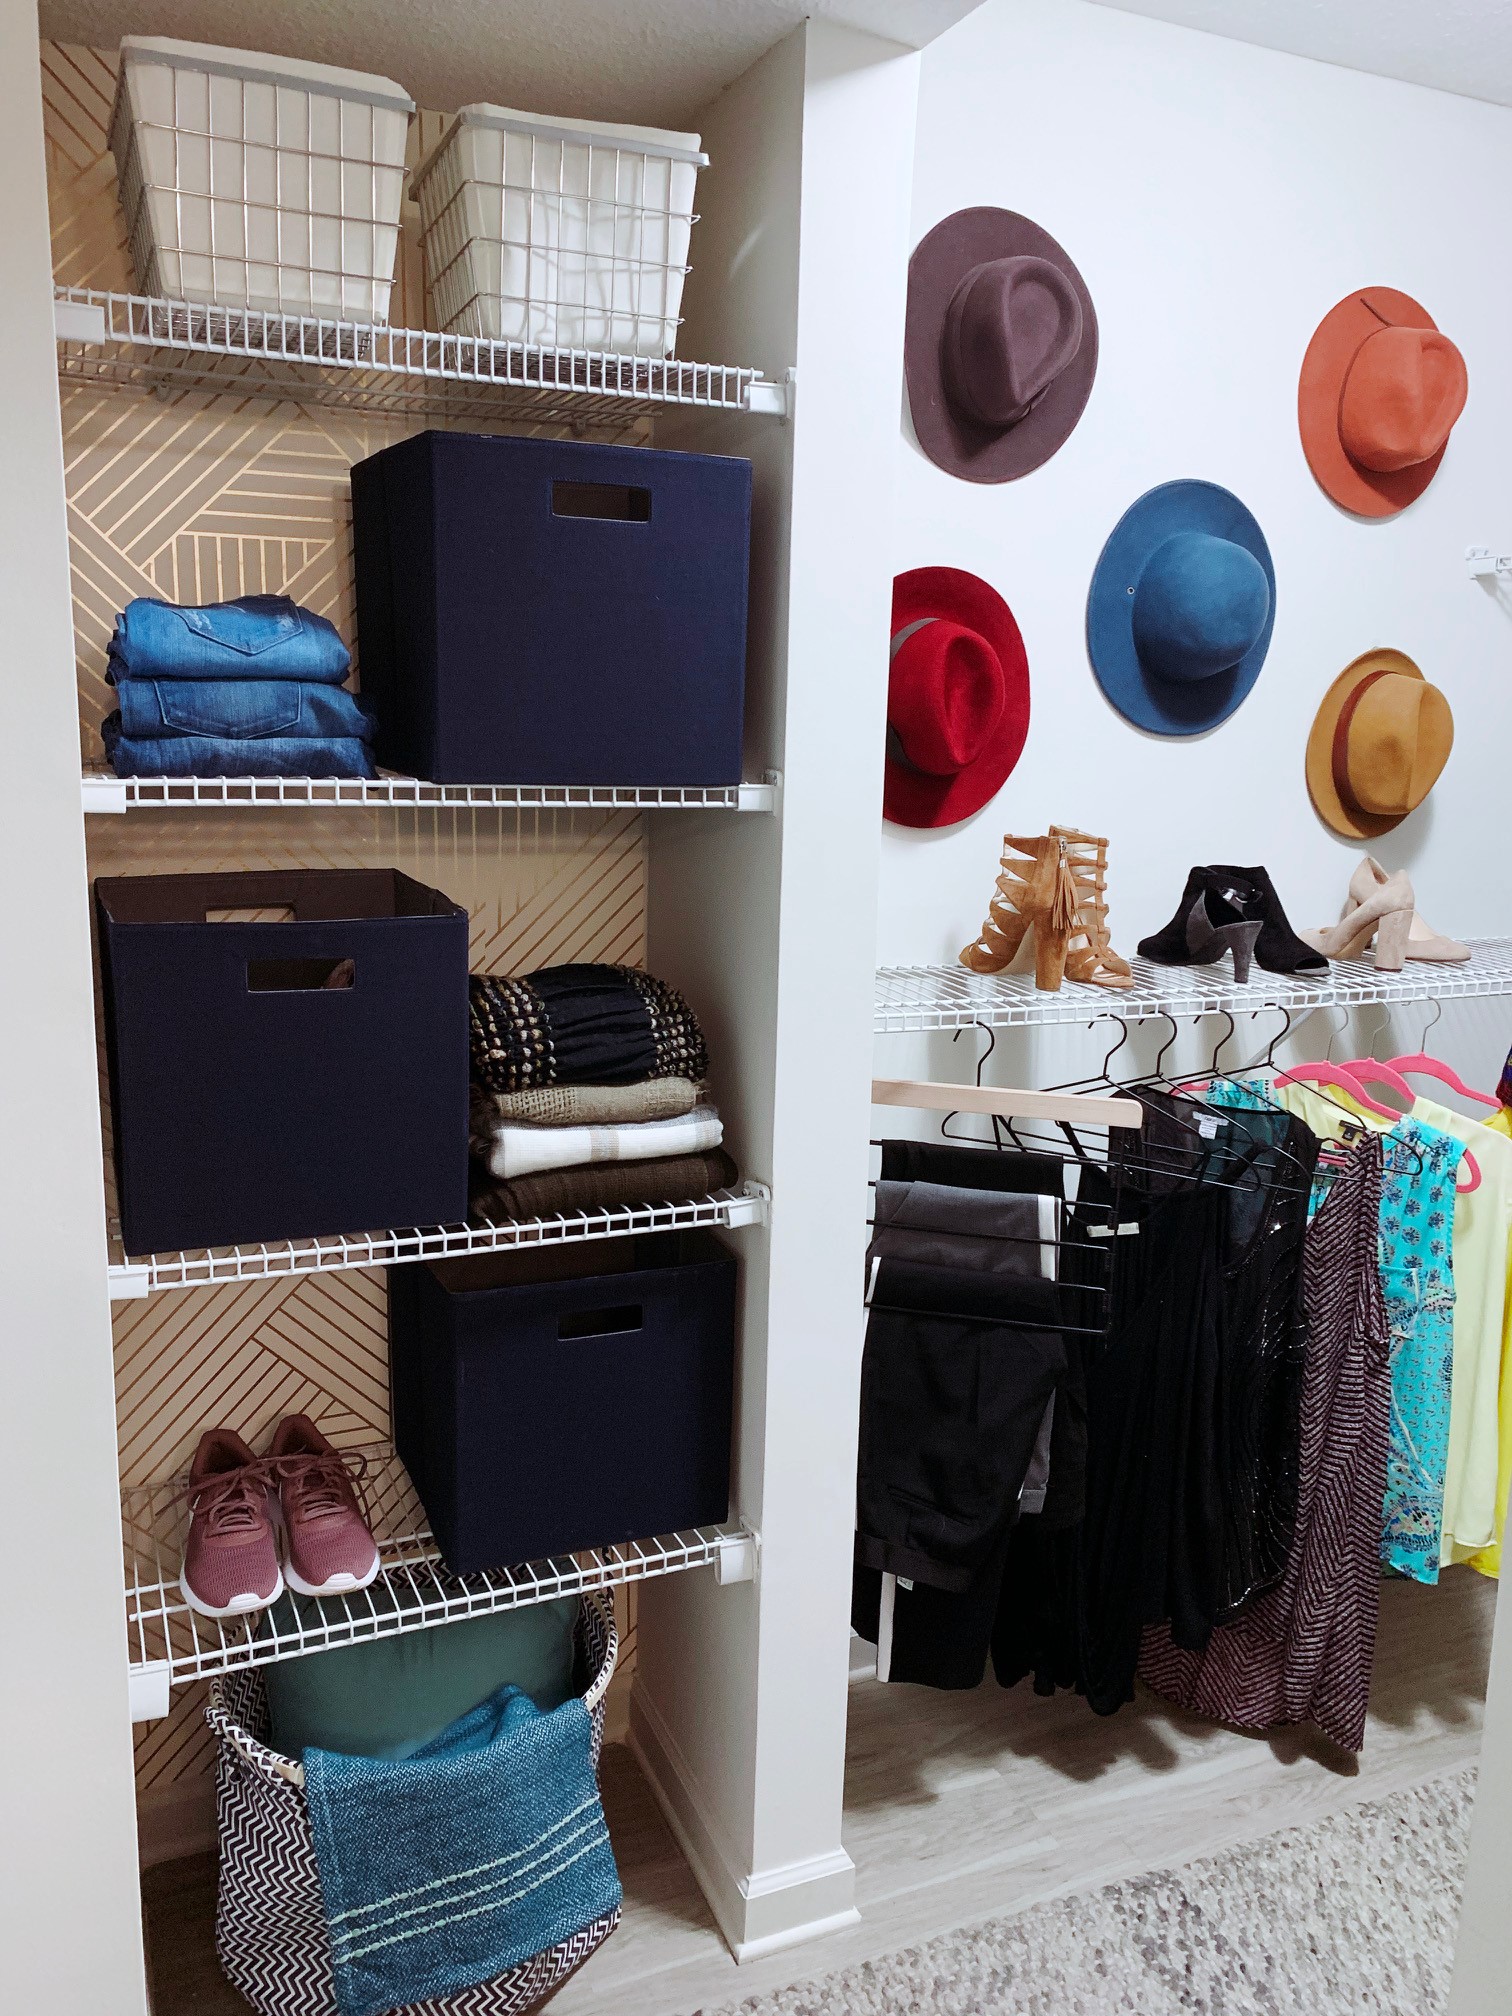 How to Organize a Closet - Closet Organization Tips